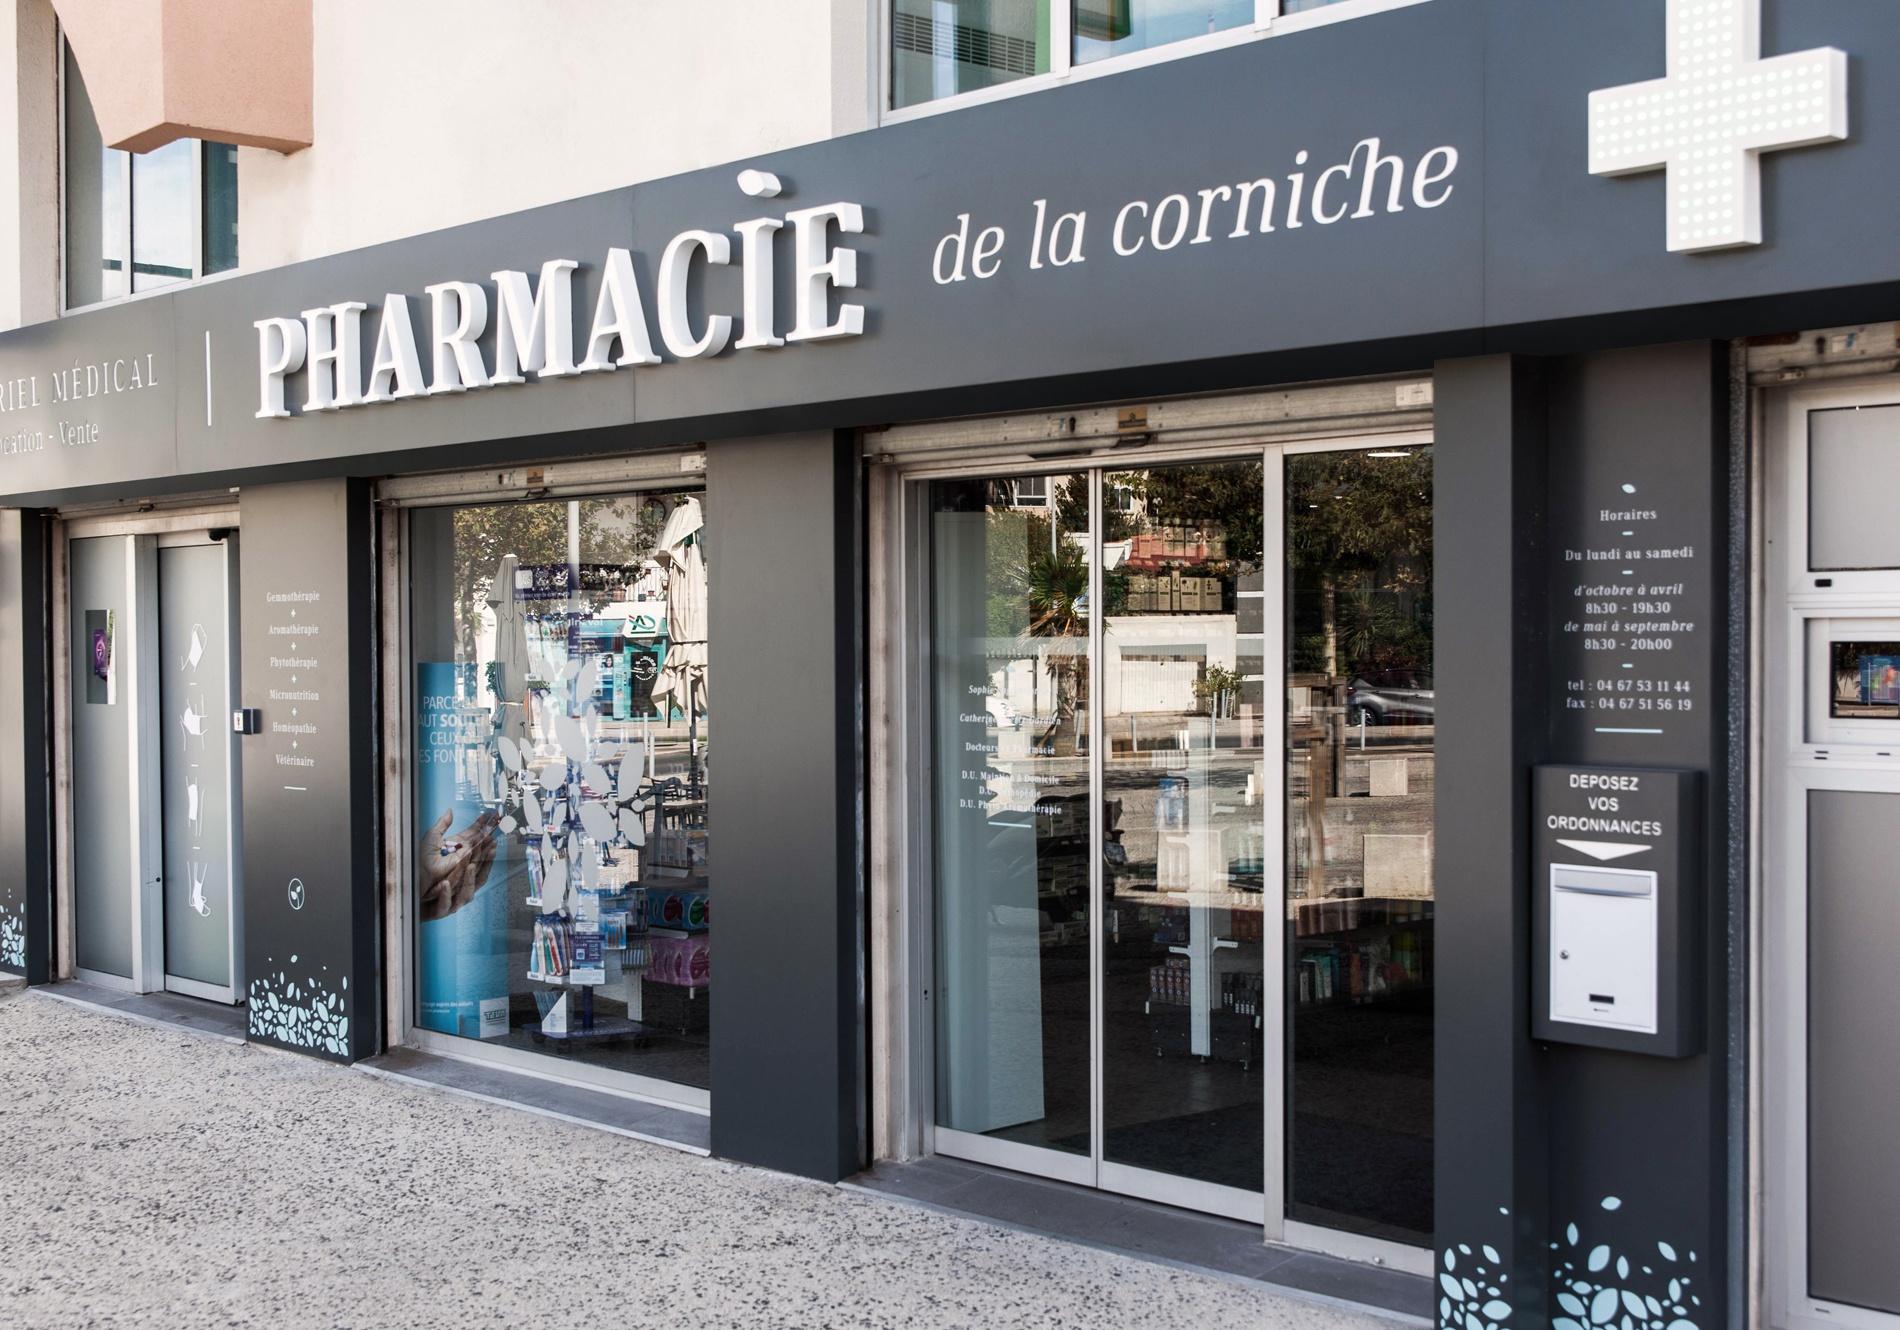 Pharmacie De La Corniche I Sète 34 Sète